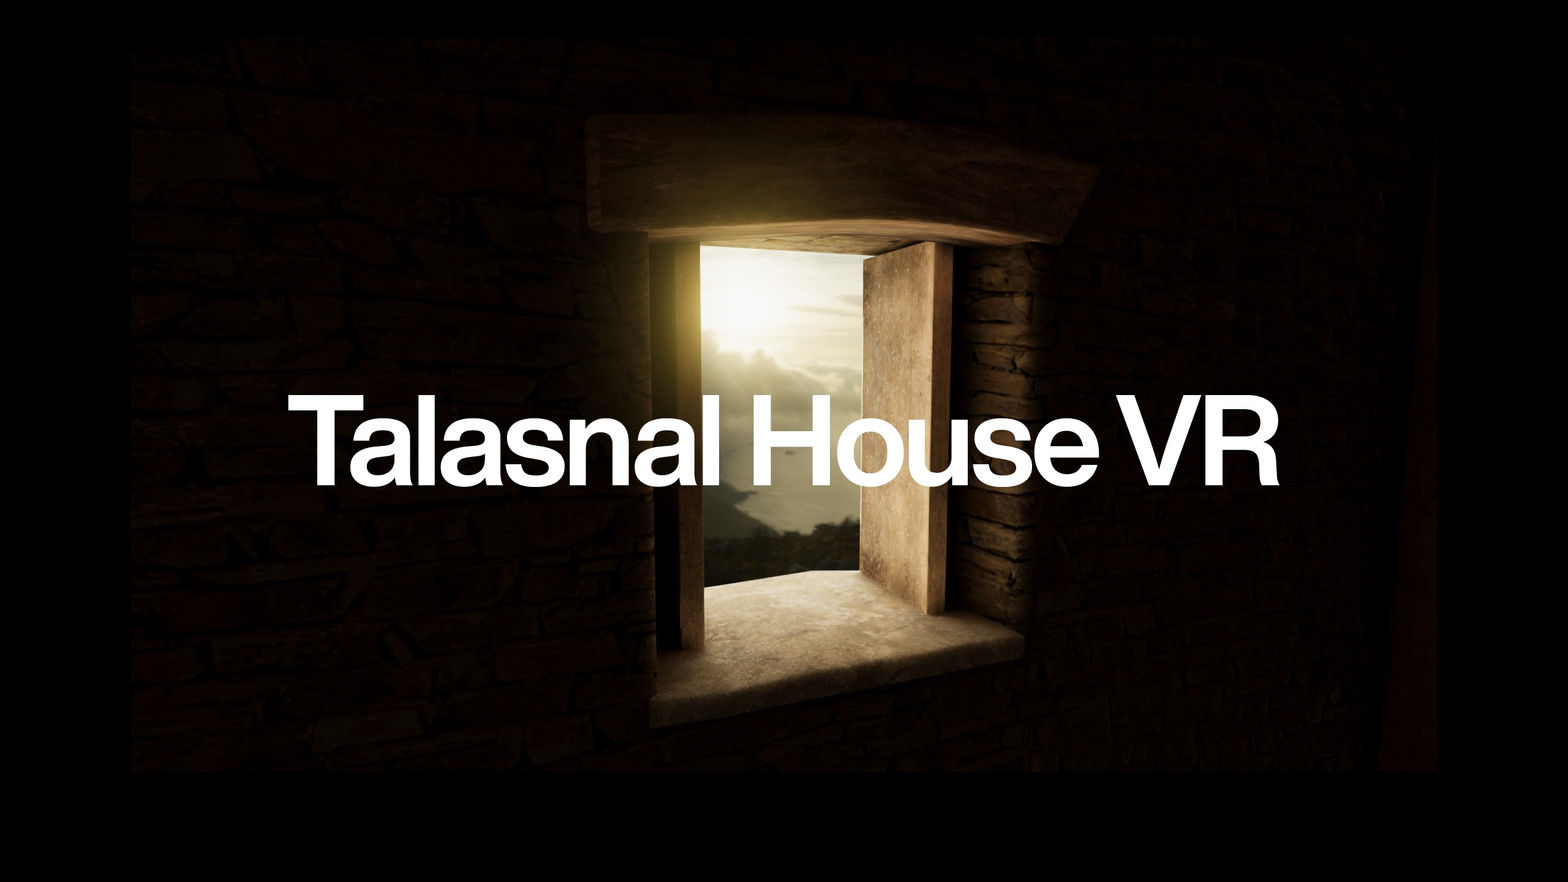 Talasnal House VR